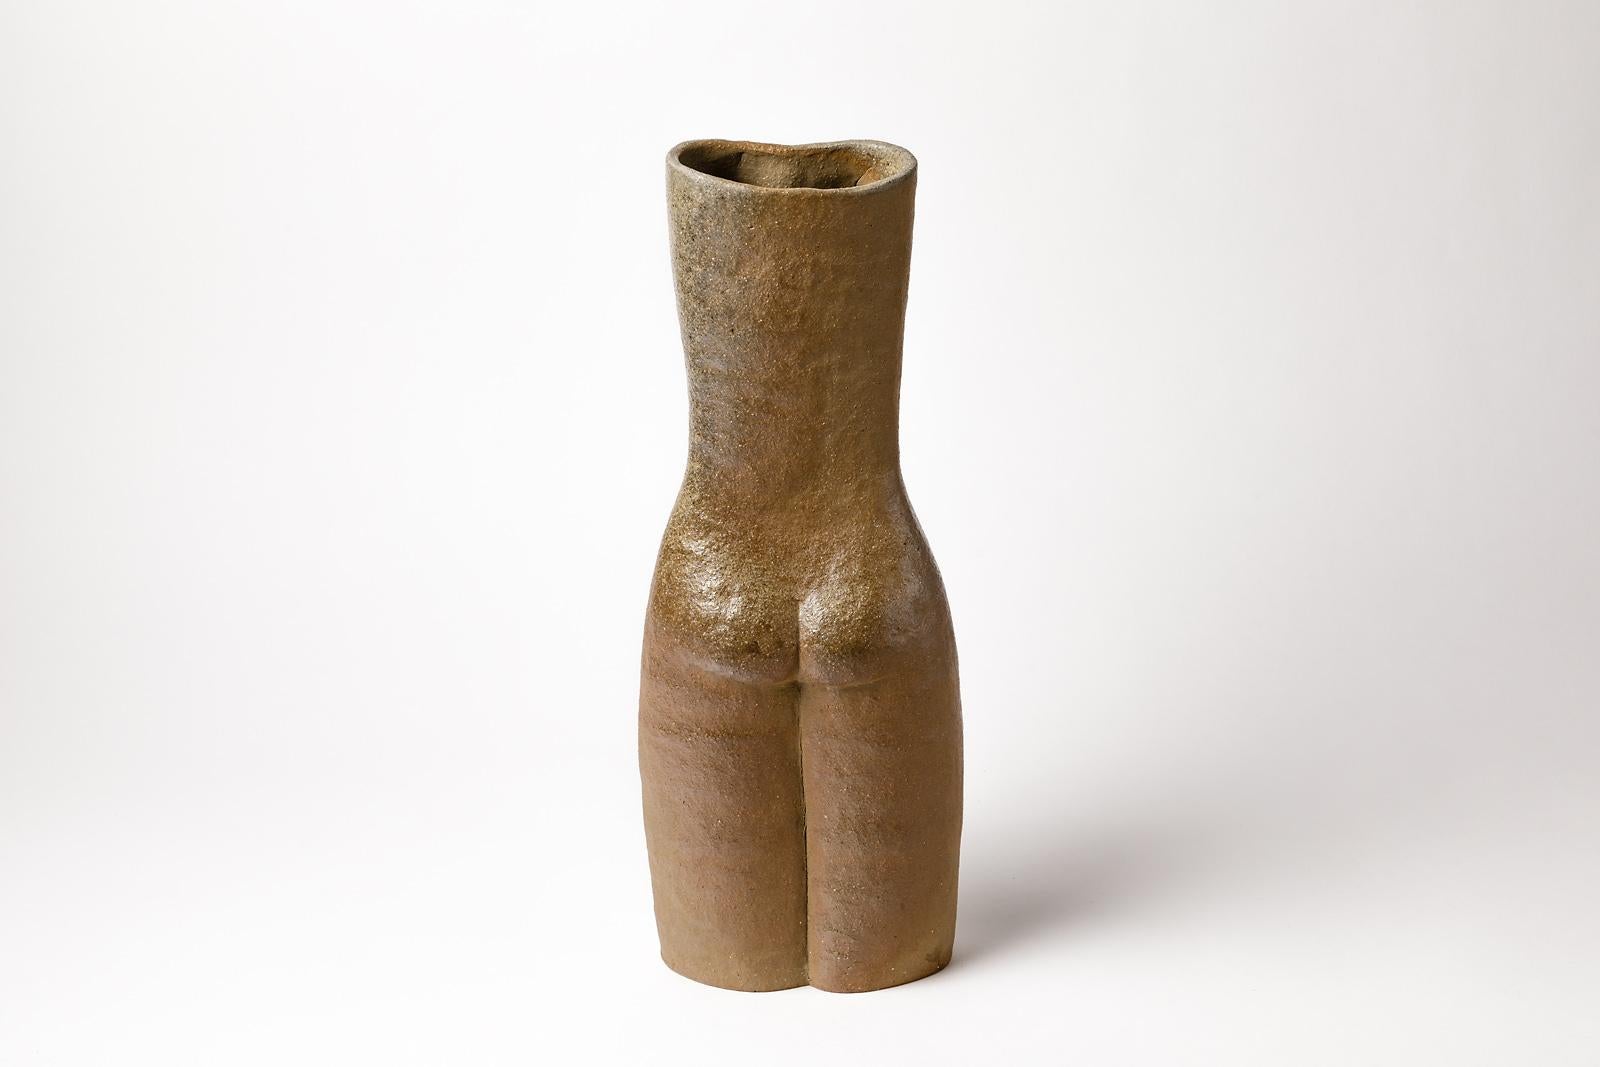 French Light Brown Stoneware Figurative Ceramic Vase by Martin Hammond, 1975